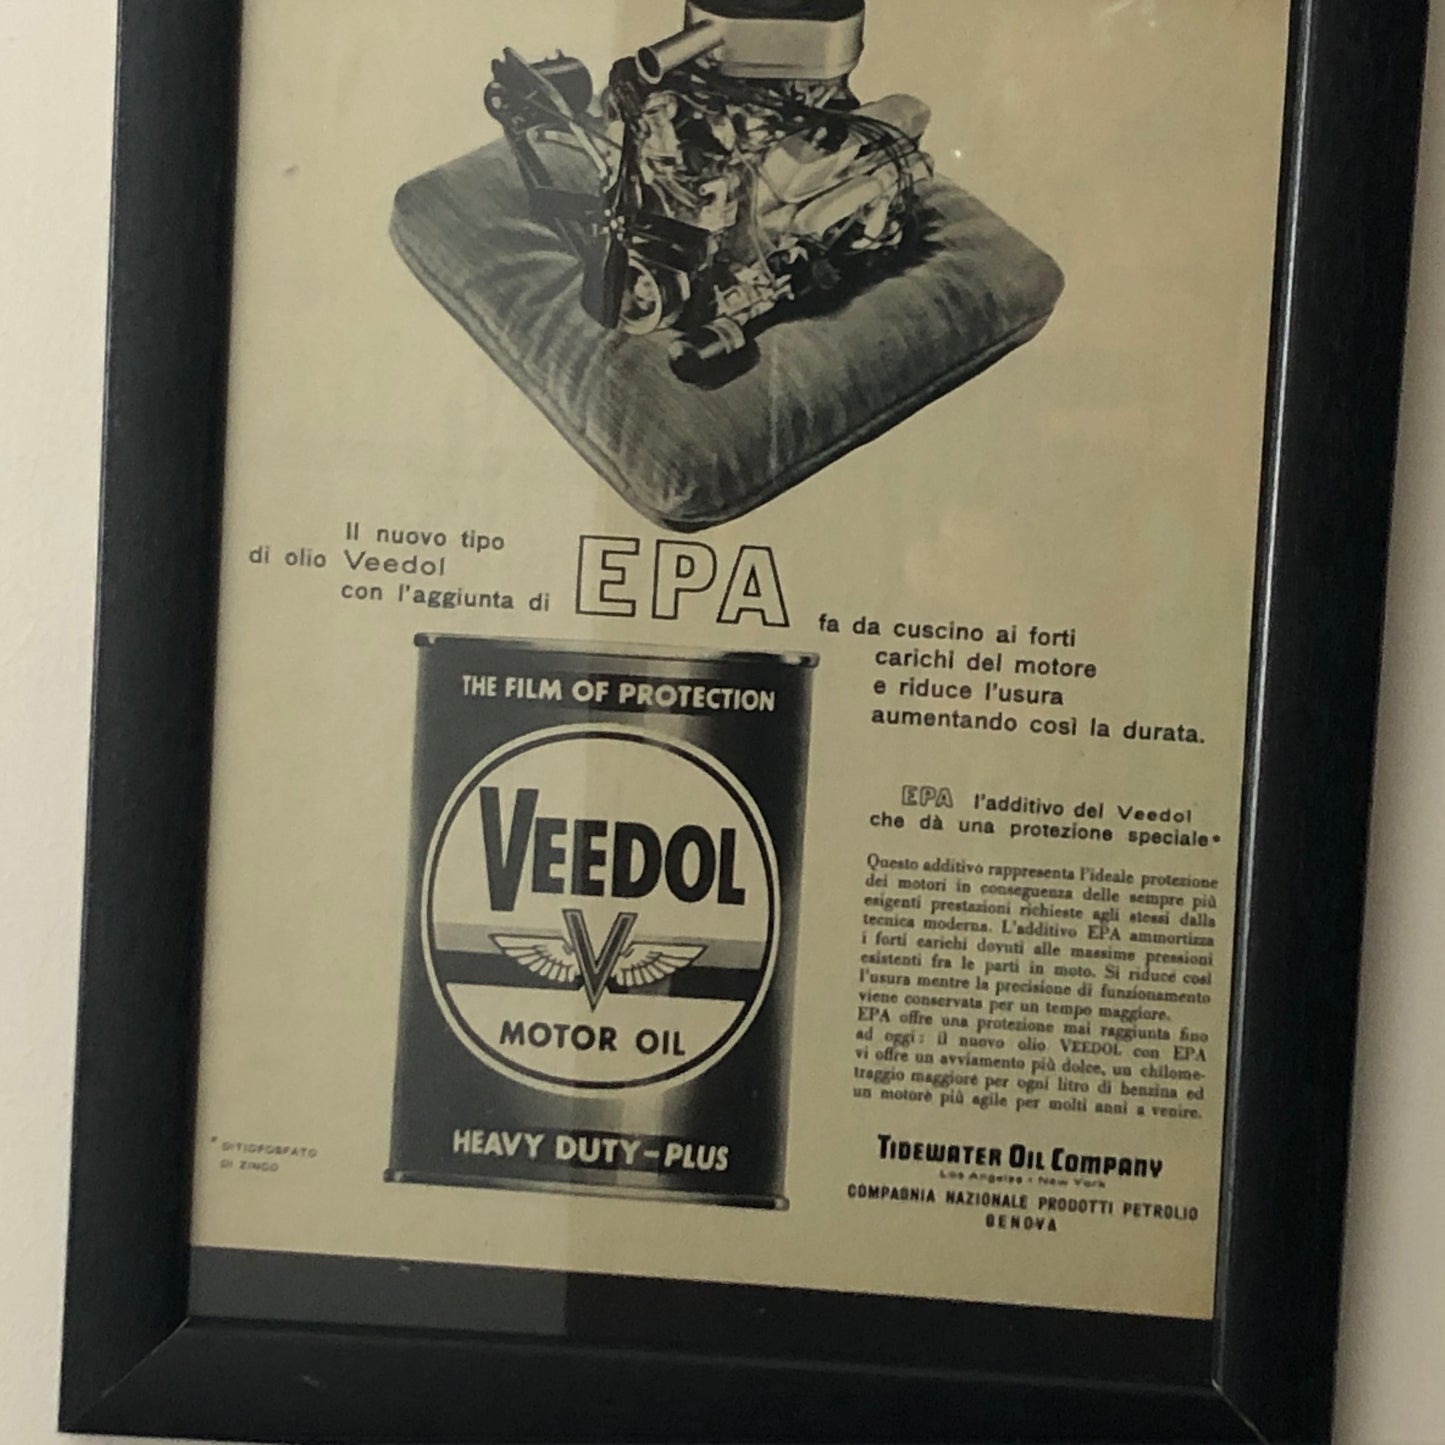 Veedol Motor Oil, Advertisement Year 1959 Veedol Motor Oil with Caption in Italian